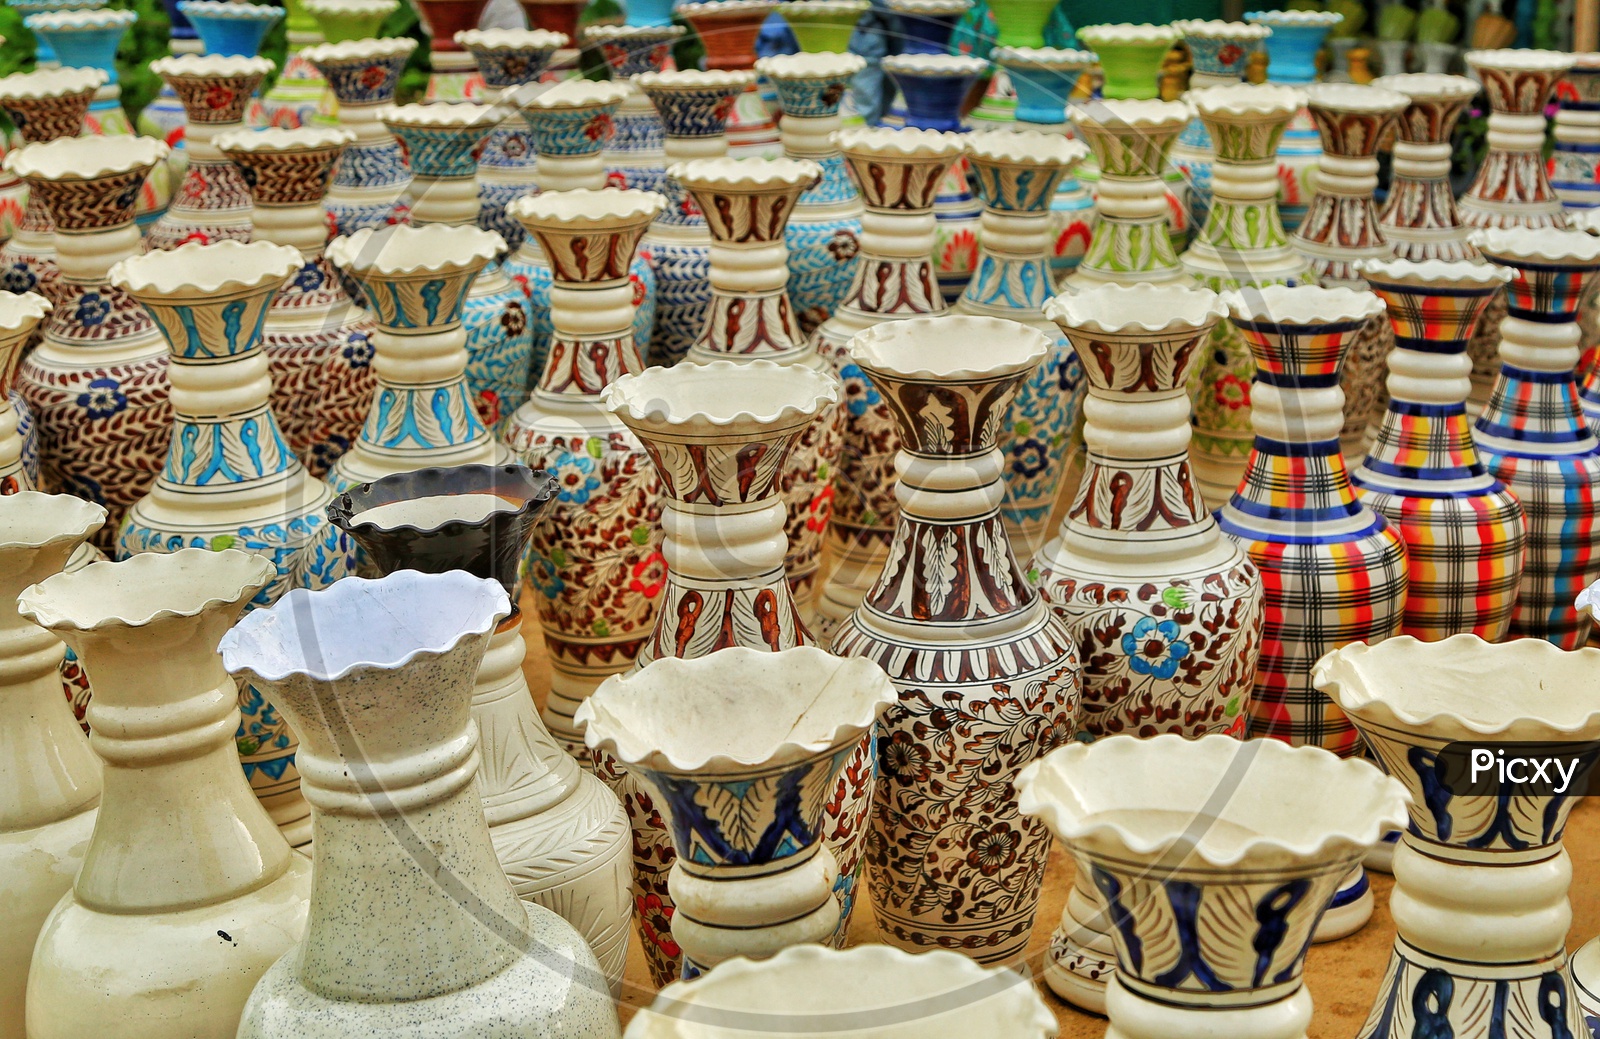 Art and Craft shopping in Guwahati